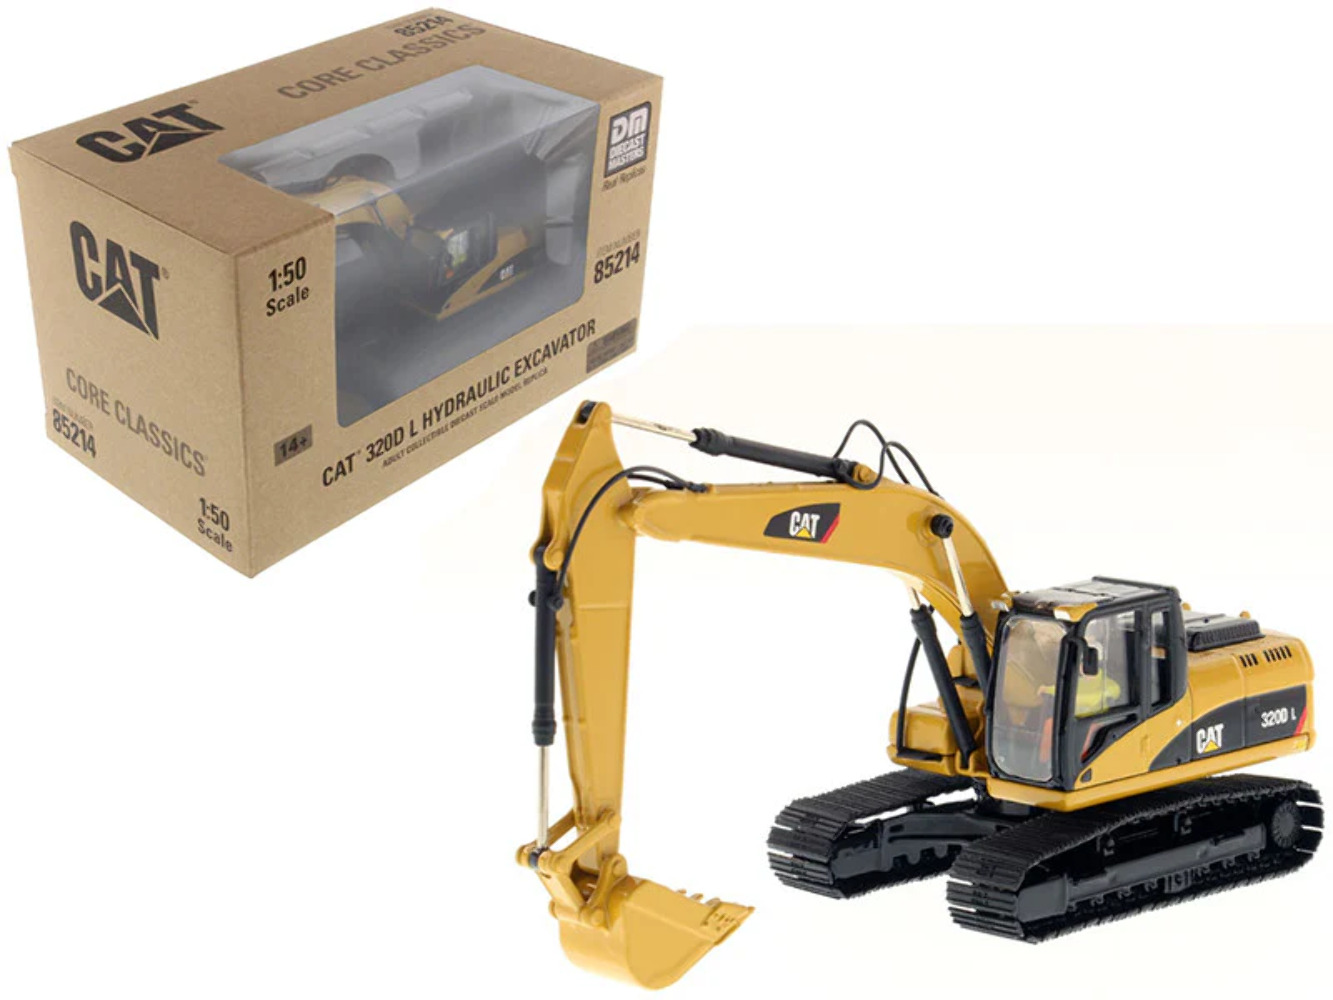 CAT Caterpillar 320D L Hydraulic Excavator with Operator \\Core Classics Series\\\